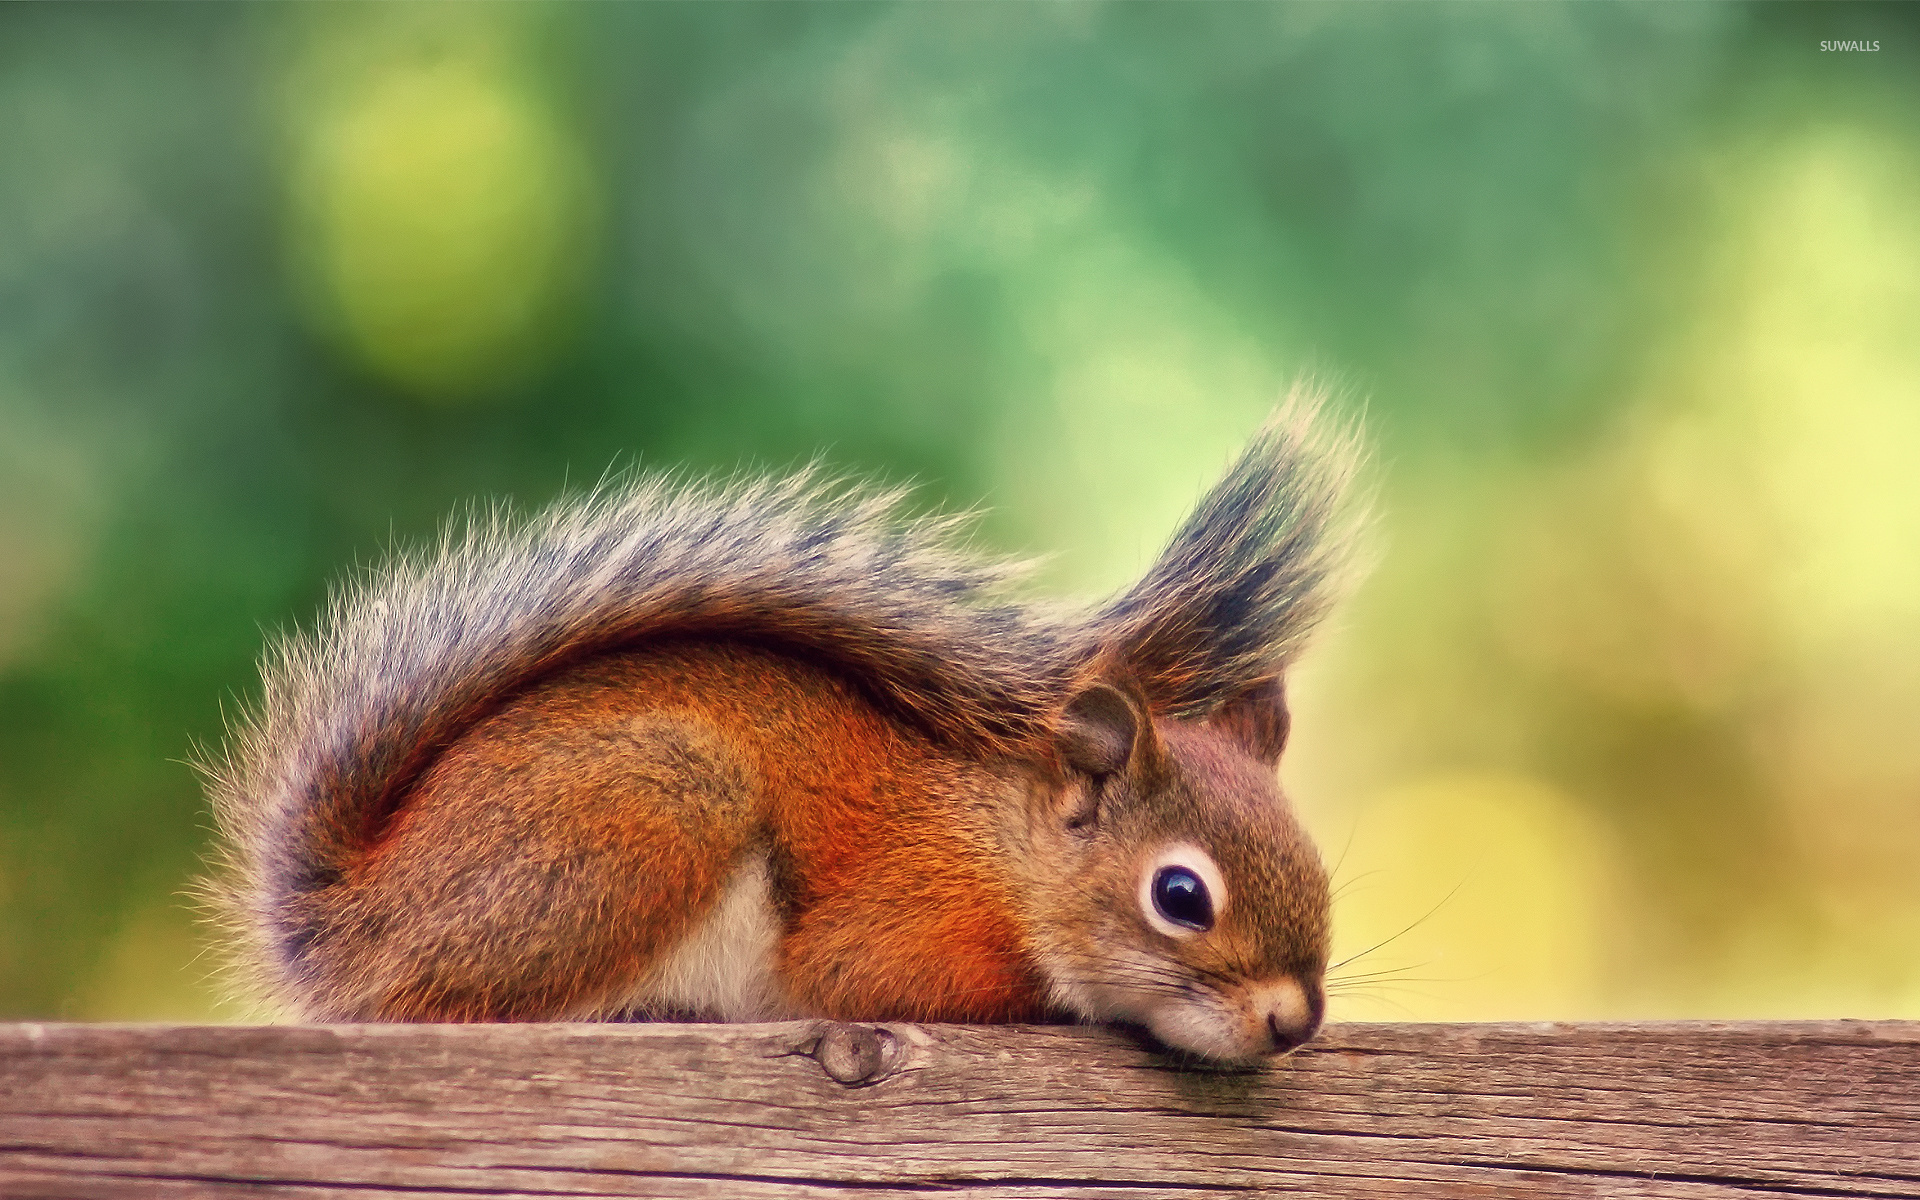 Cute squirrel wallpaper - Animal wallpapers - #39090